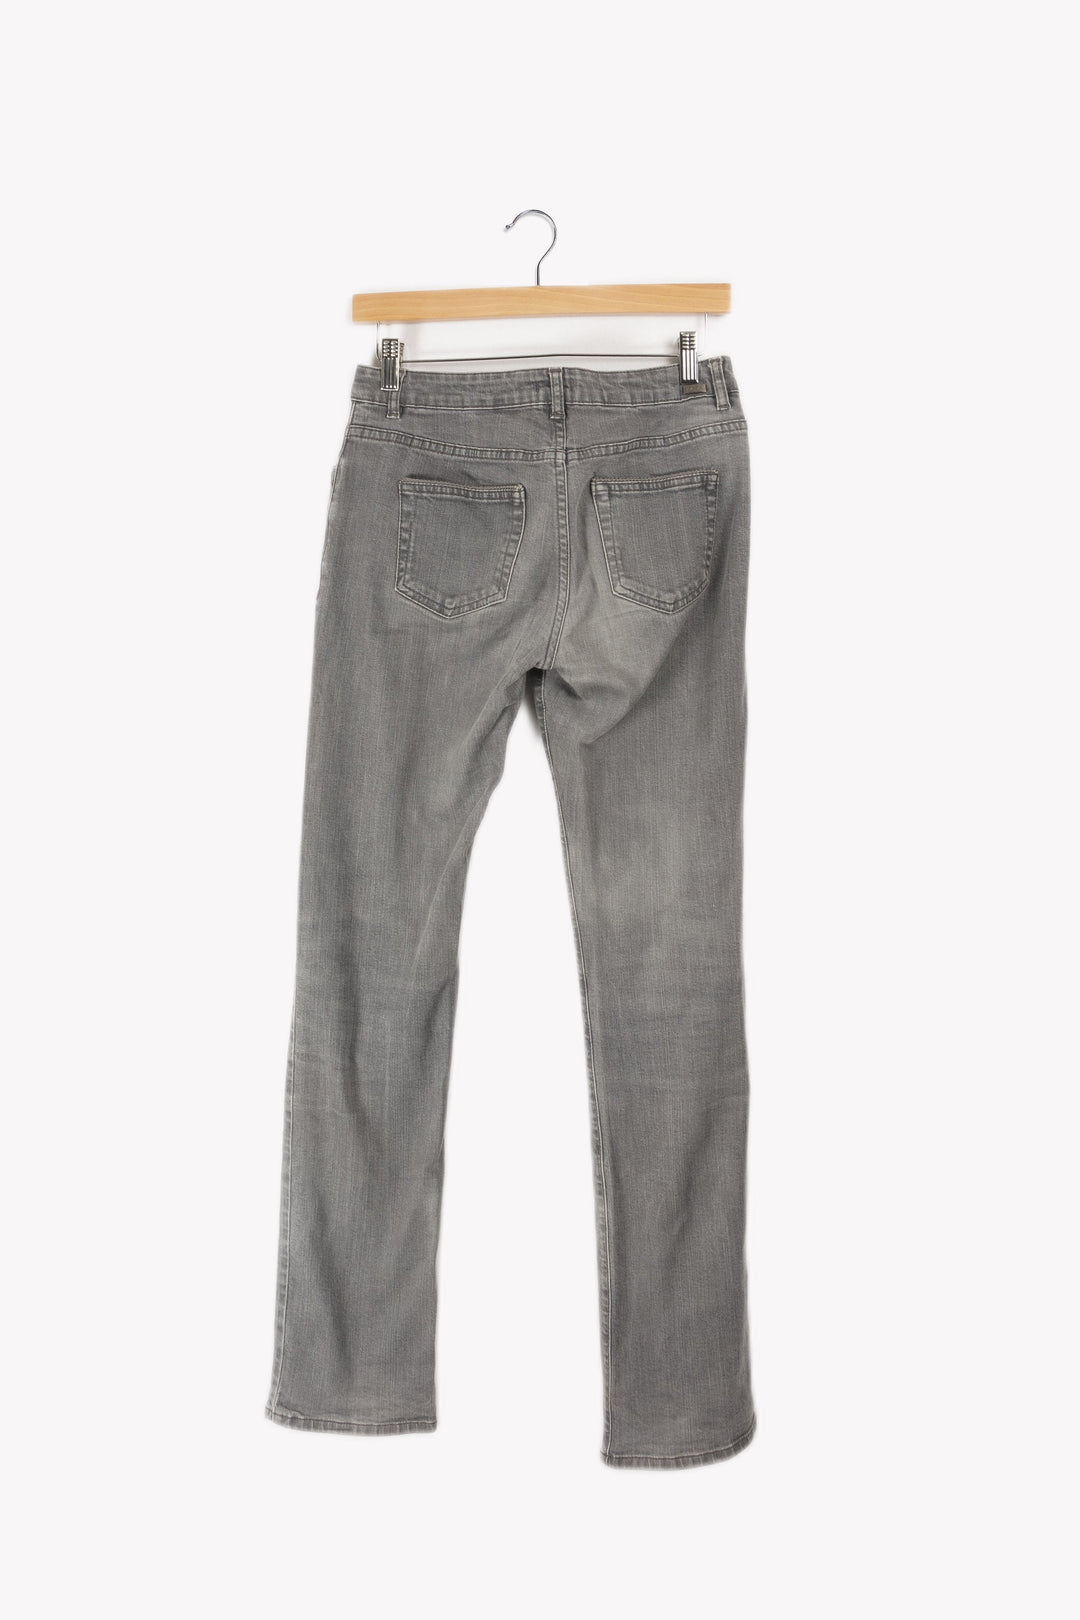 Light gray pants - M/38